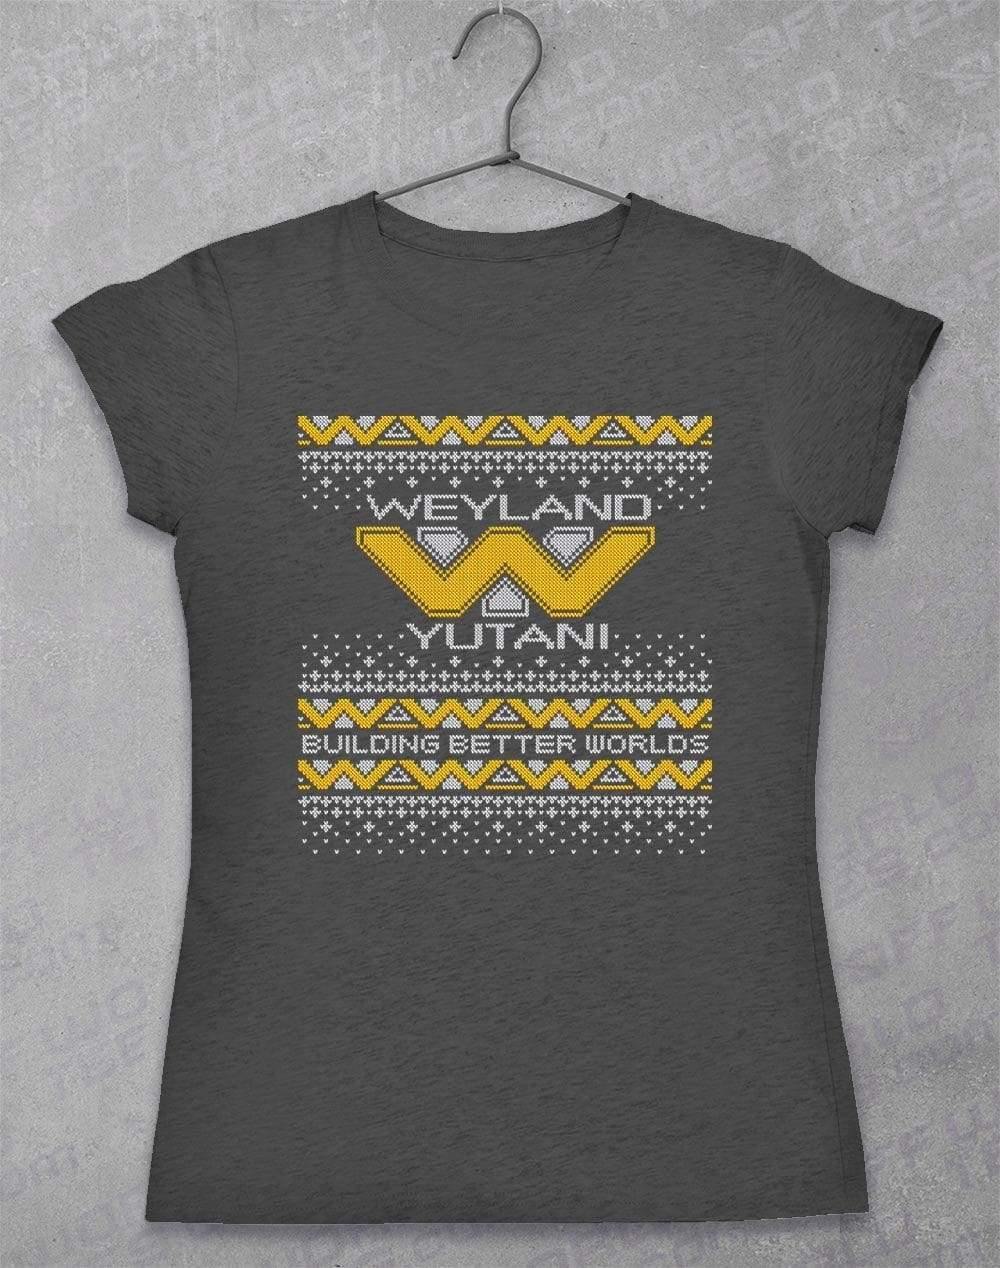 Weyland Yutani Festive Knitted-Look Women's T-Shirt 8-10 / Dark Heather  - Off World Tees